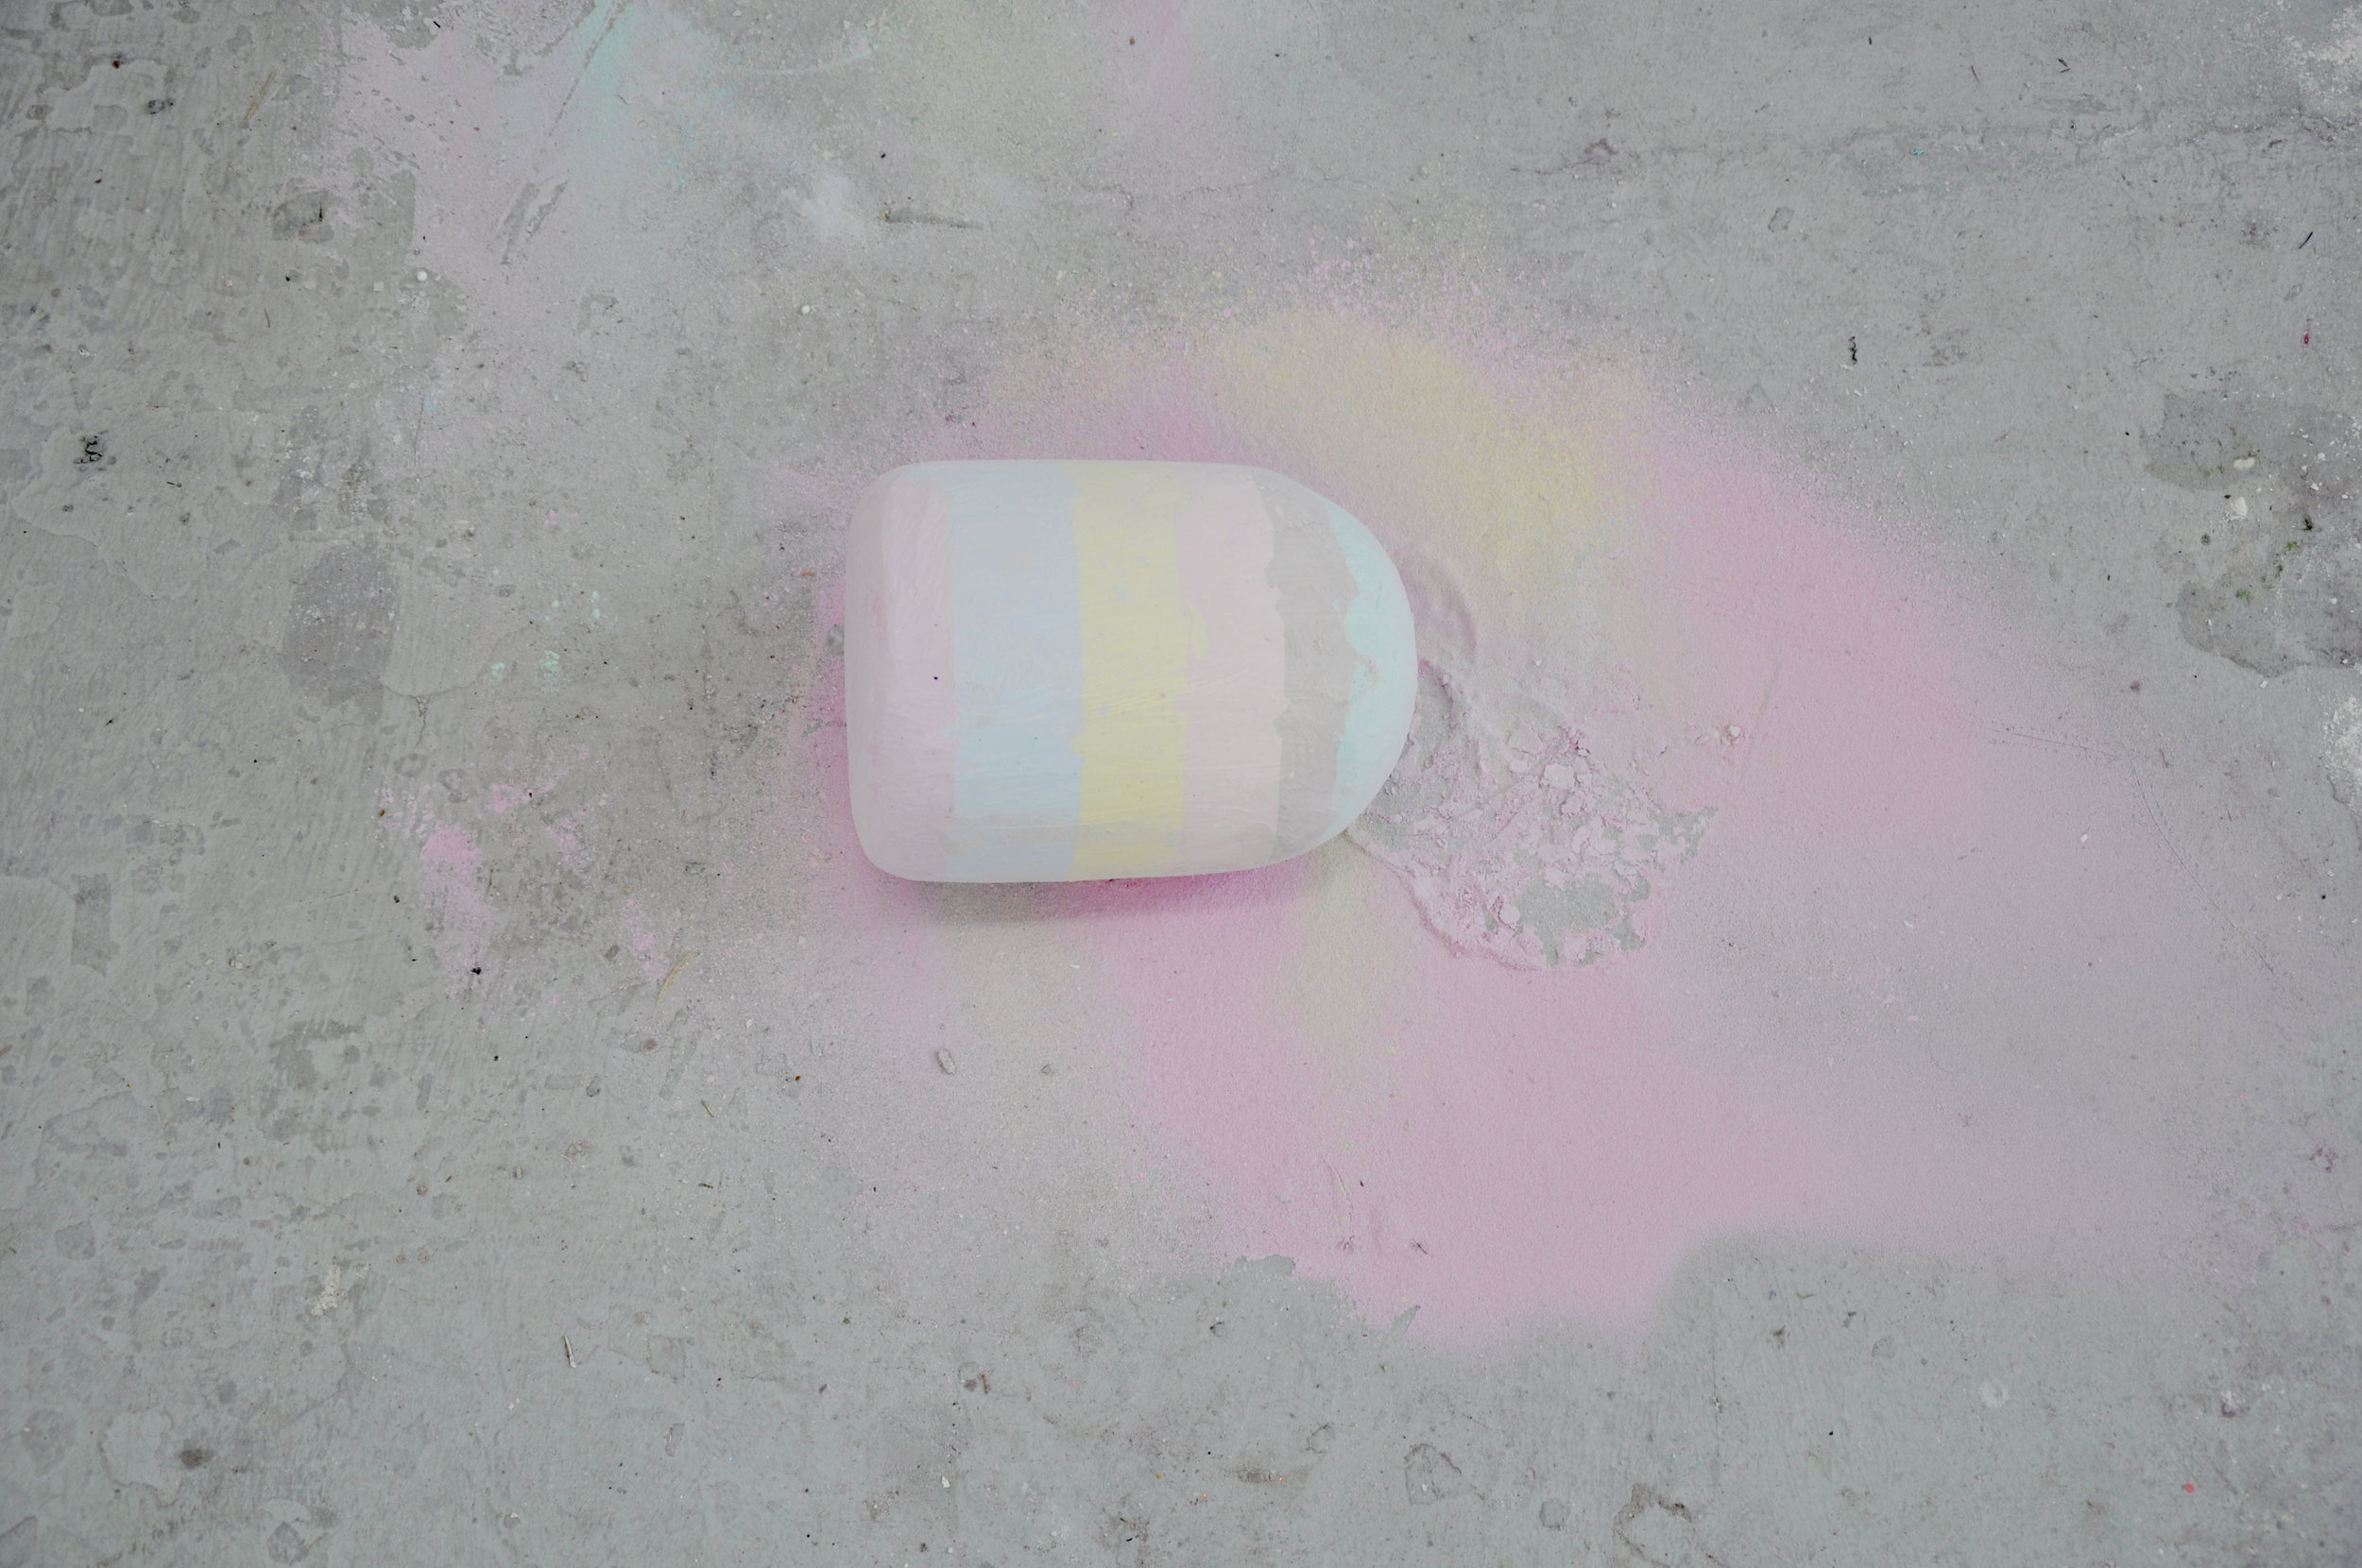 Studio view 2014: Chalk no. 1 - Colored chalk, 40 x 30 cm, Maastricht, 2014 